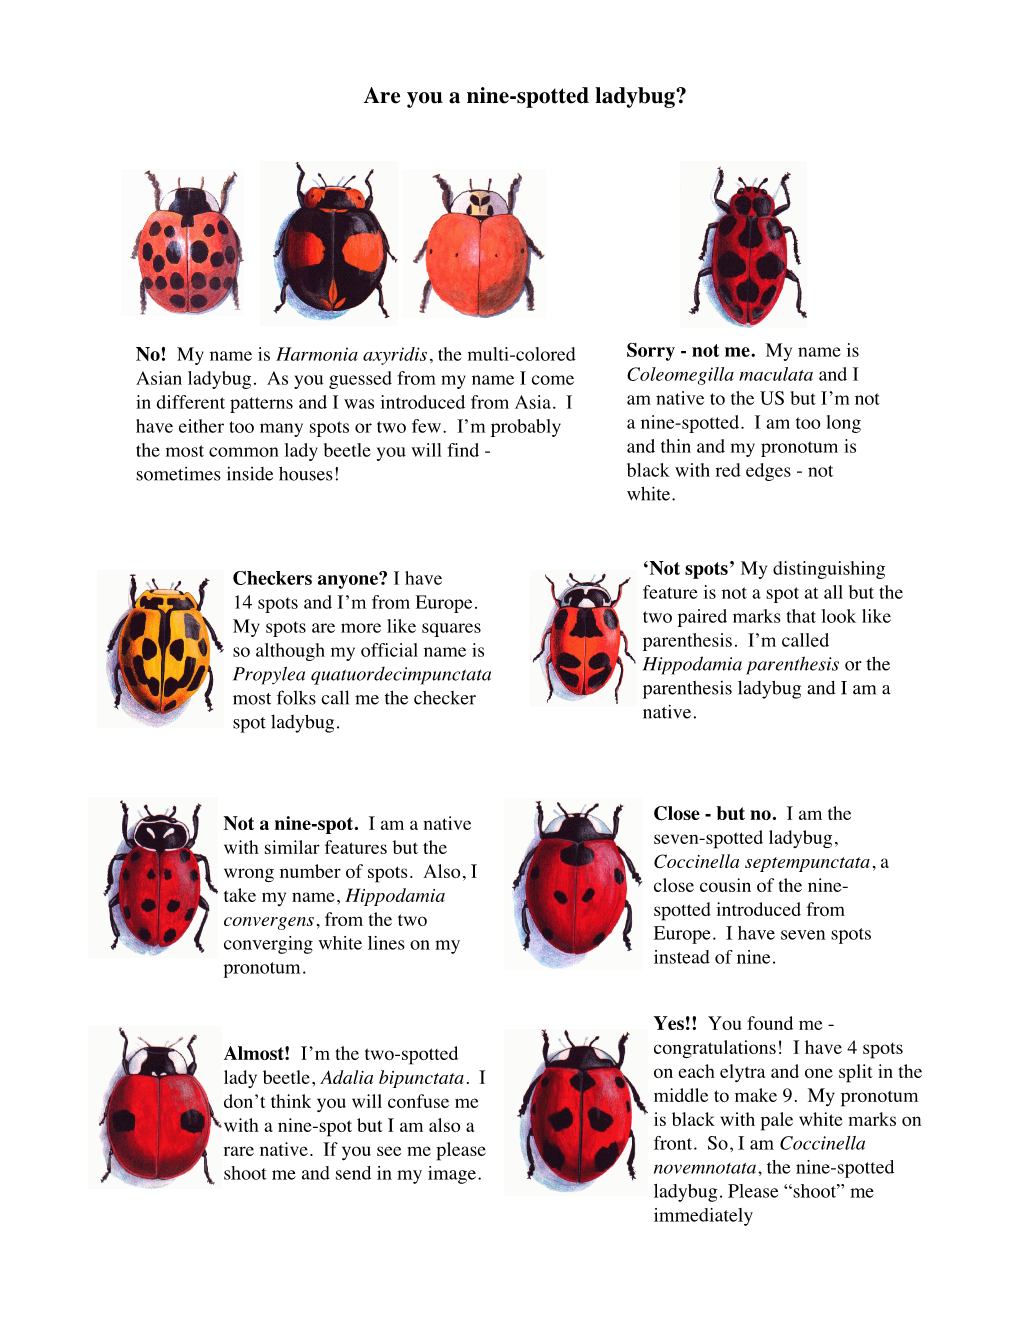 Are You a Nine-Spotted Ladybug?